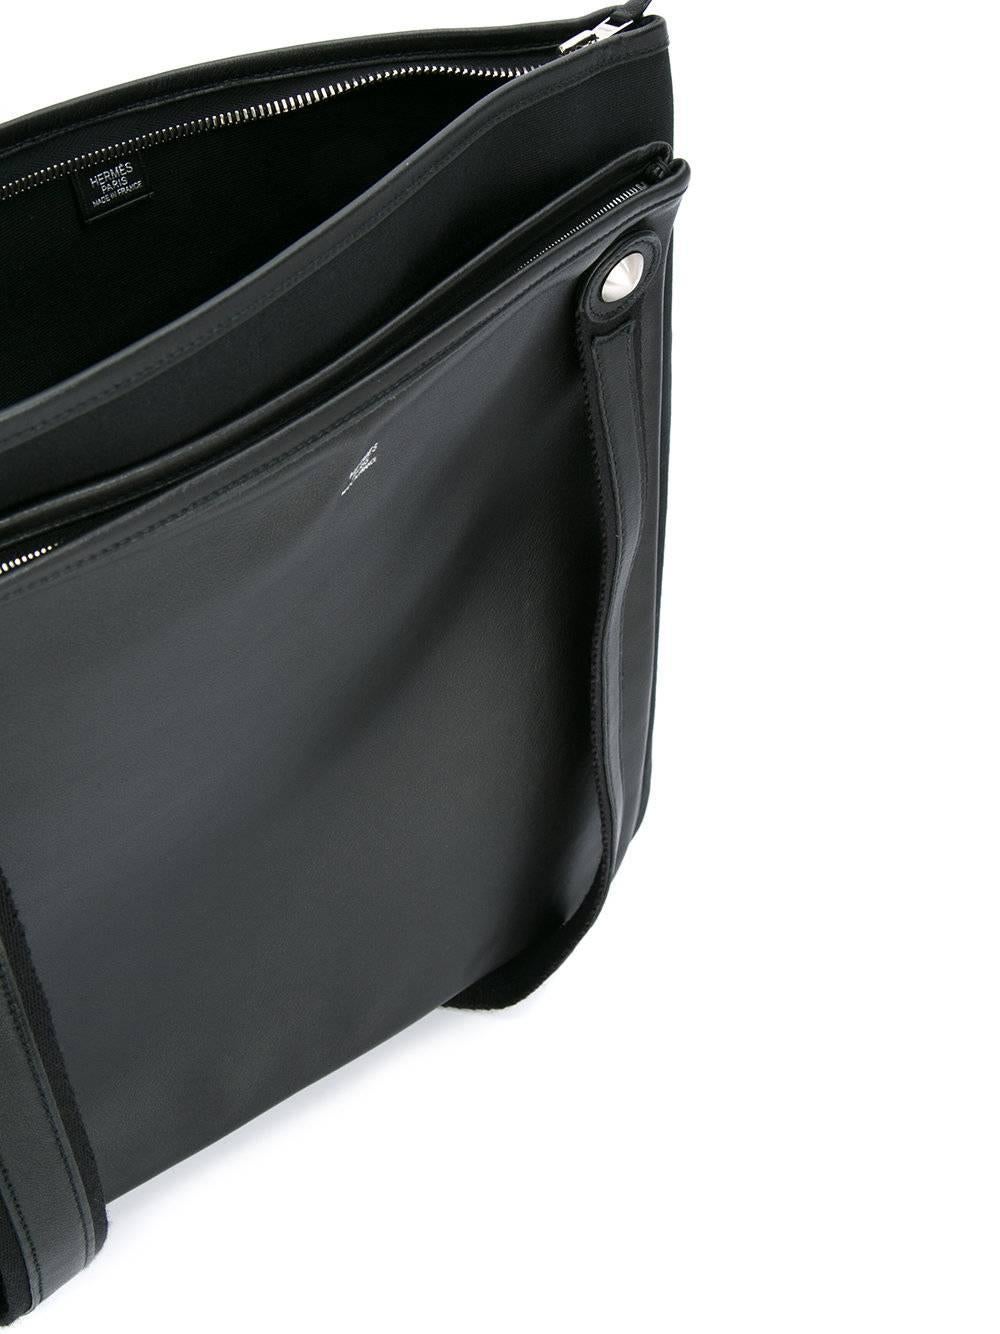 Hermes Black Leather Canvas Men's Top Handle Satchel Tote Shoulder Bag in Box 1